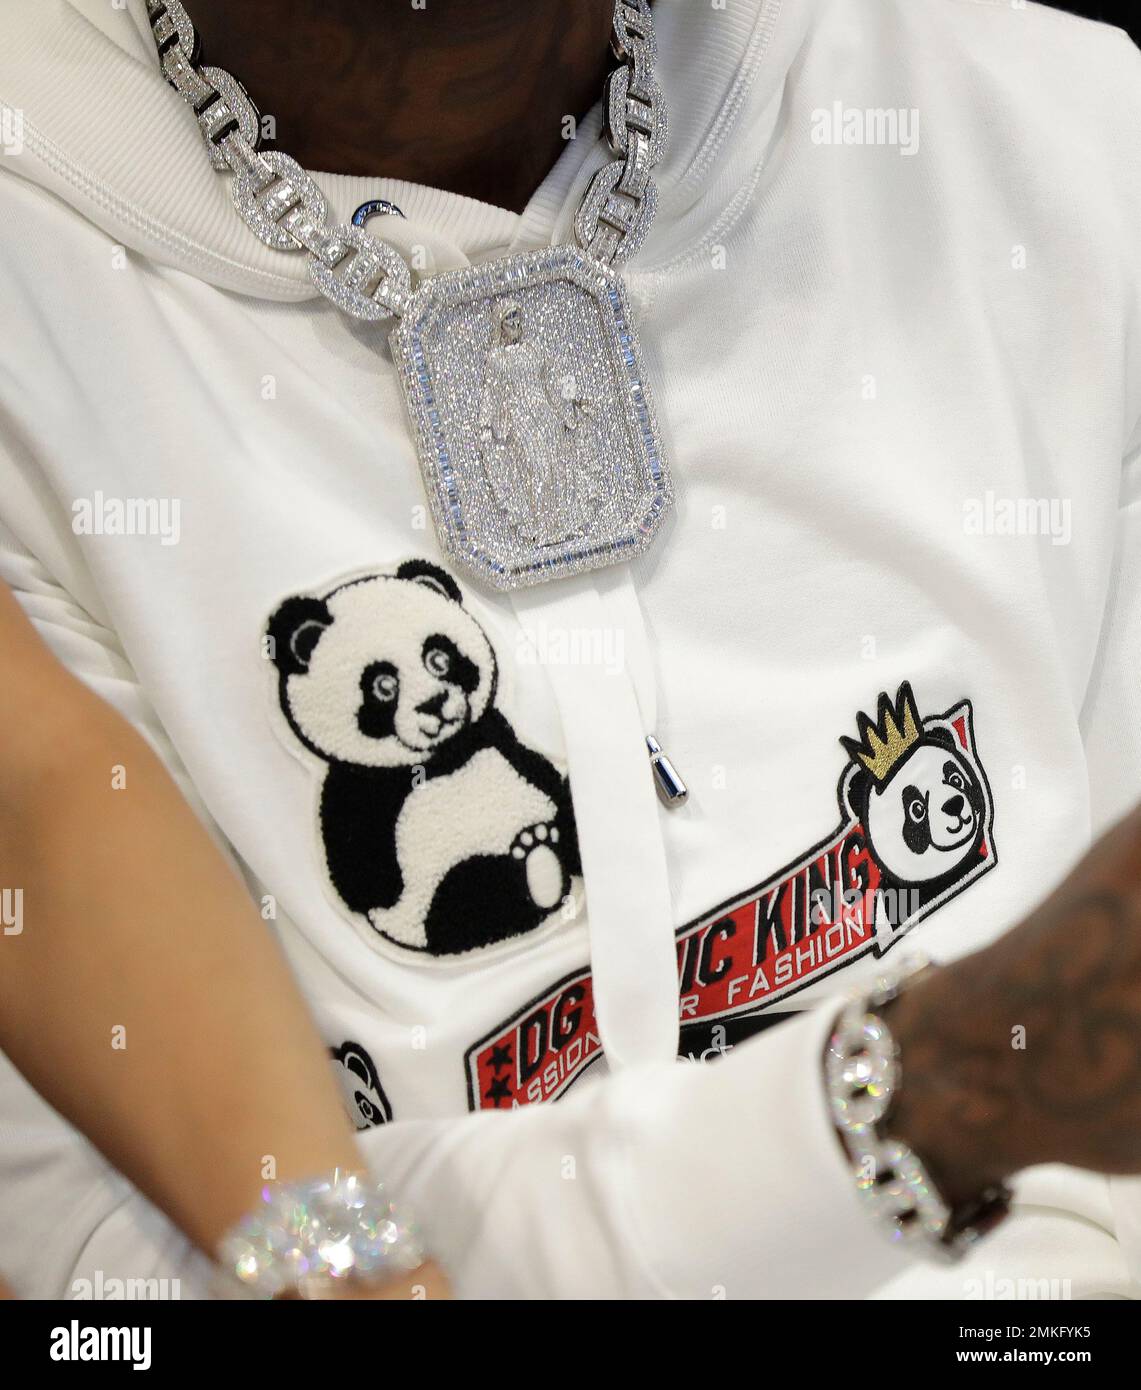 Gucci Mane Gifts Wife Keyshia Ka'Oir With New Iced Out Chain